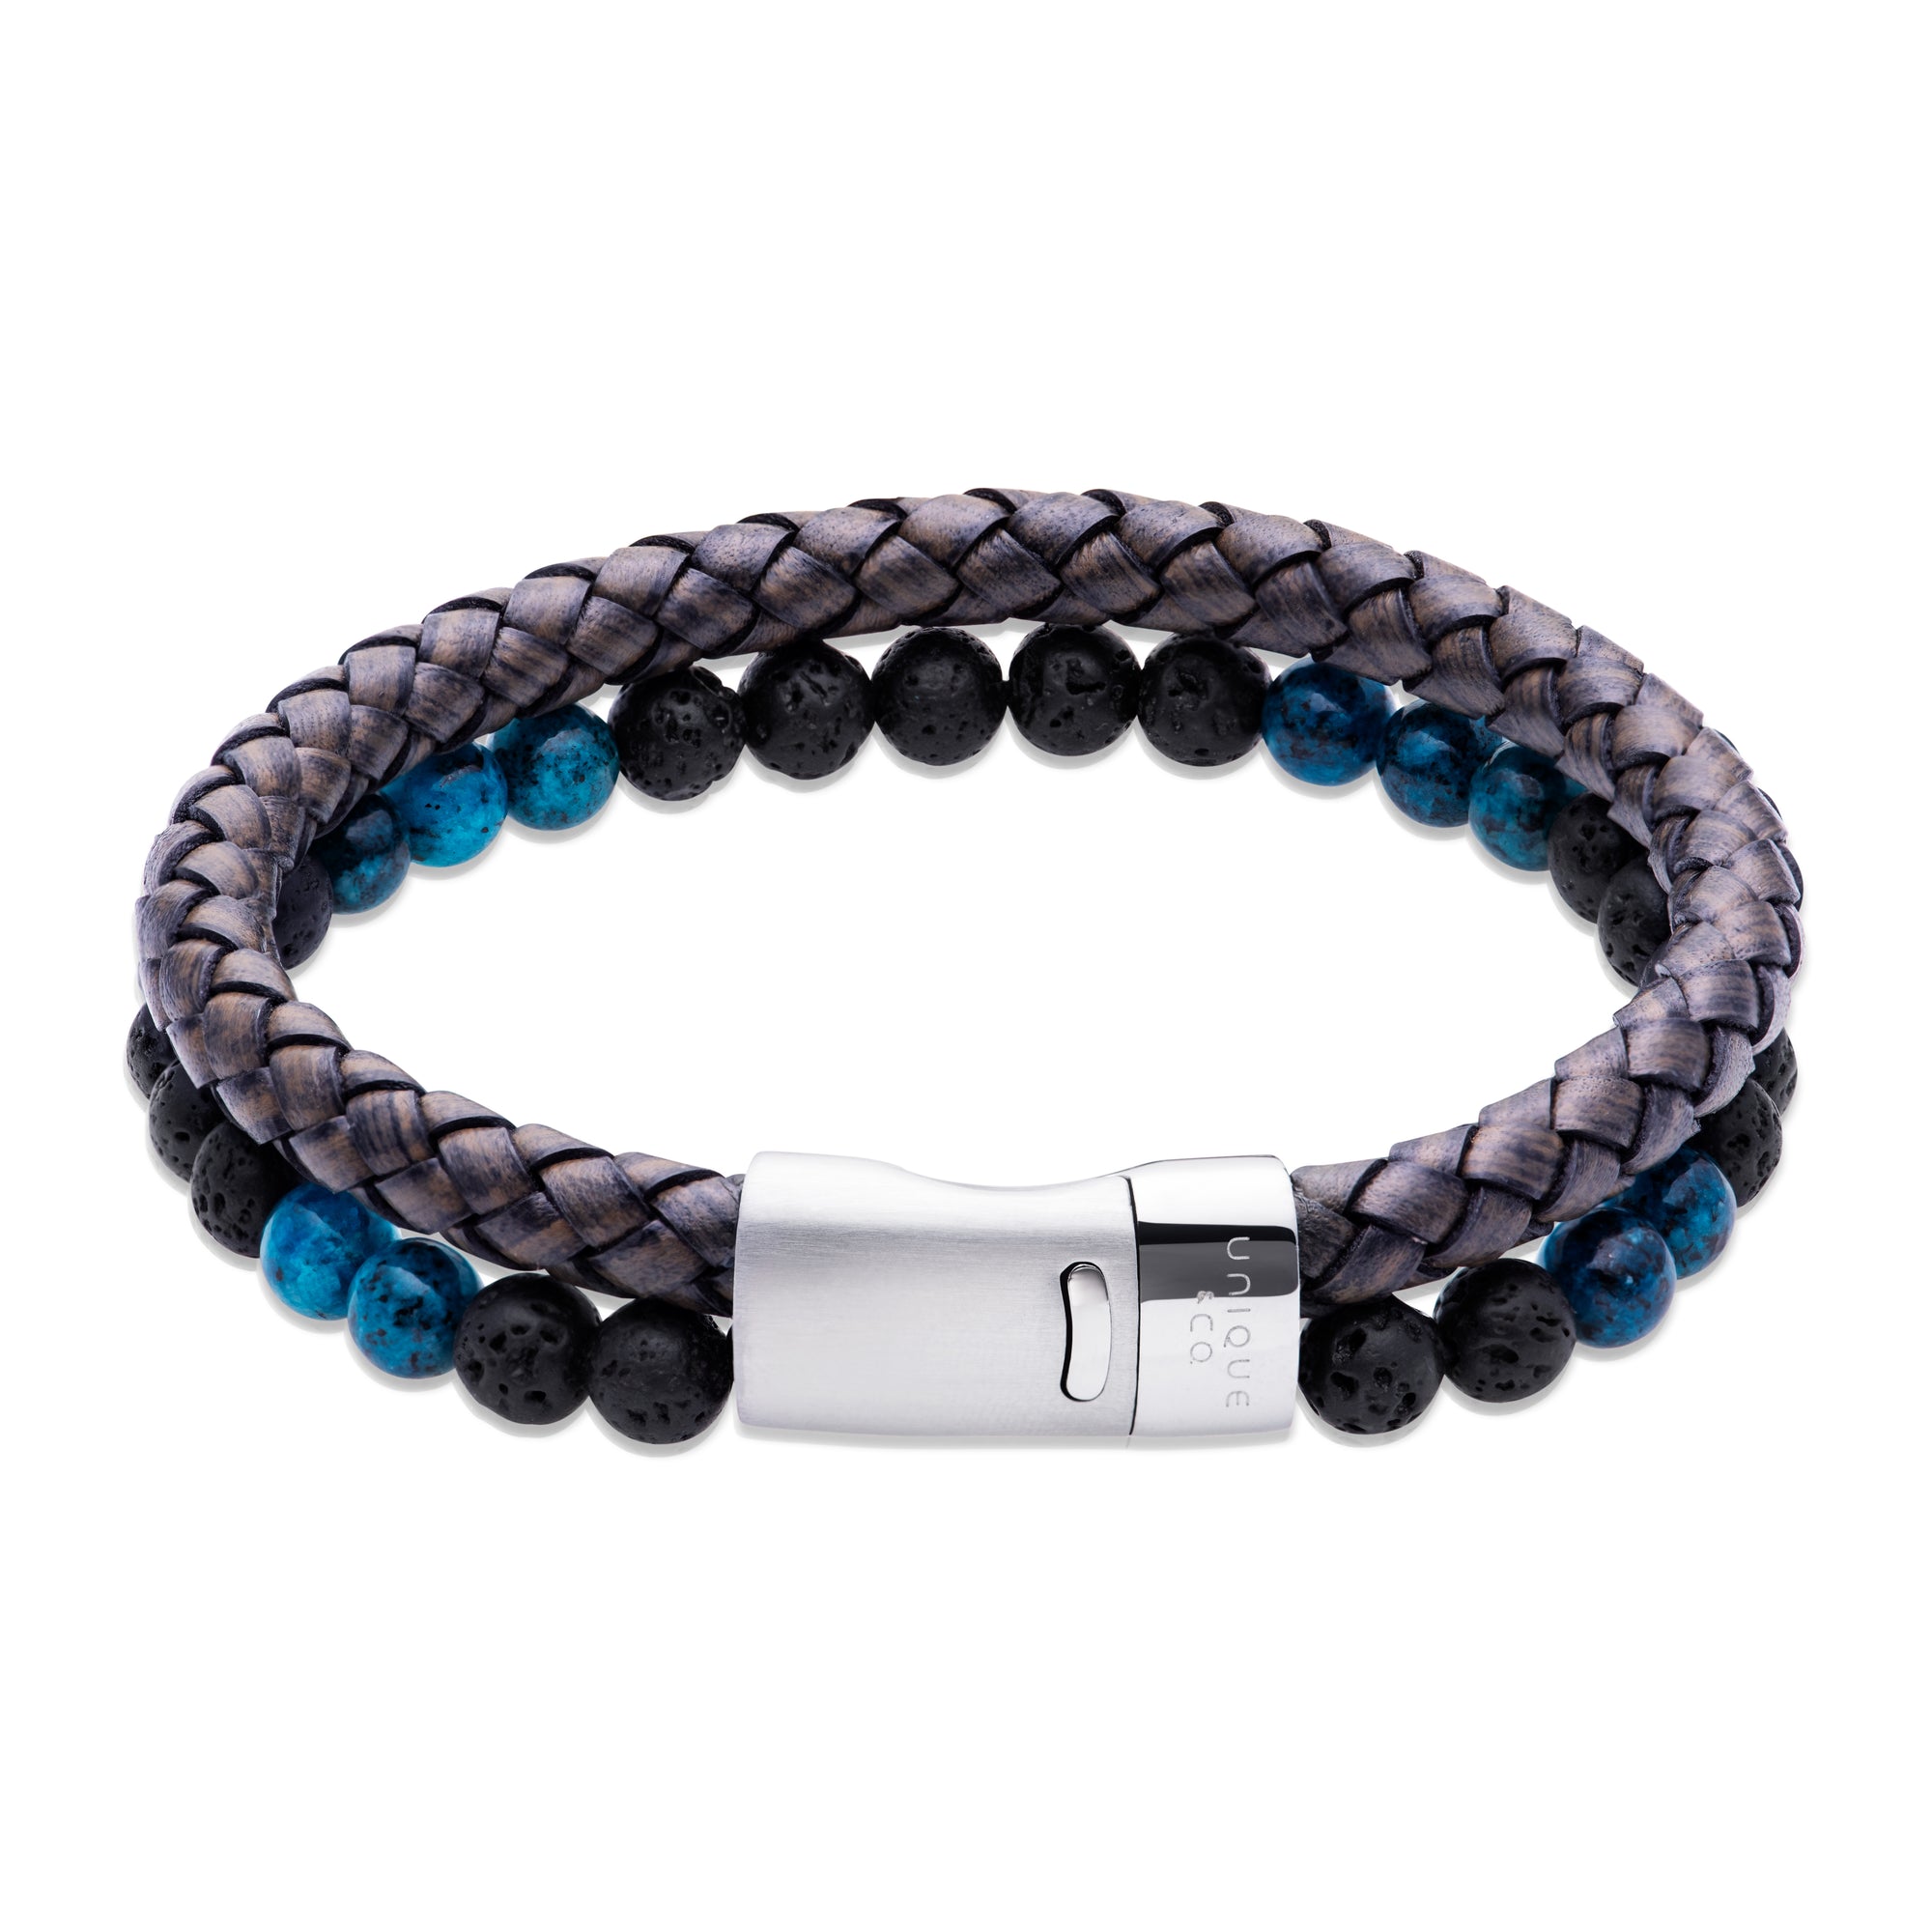 Men's Black Leather Bracelet with Lava Stone & Turquoise Beads